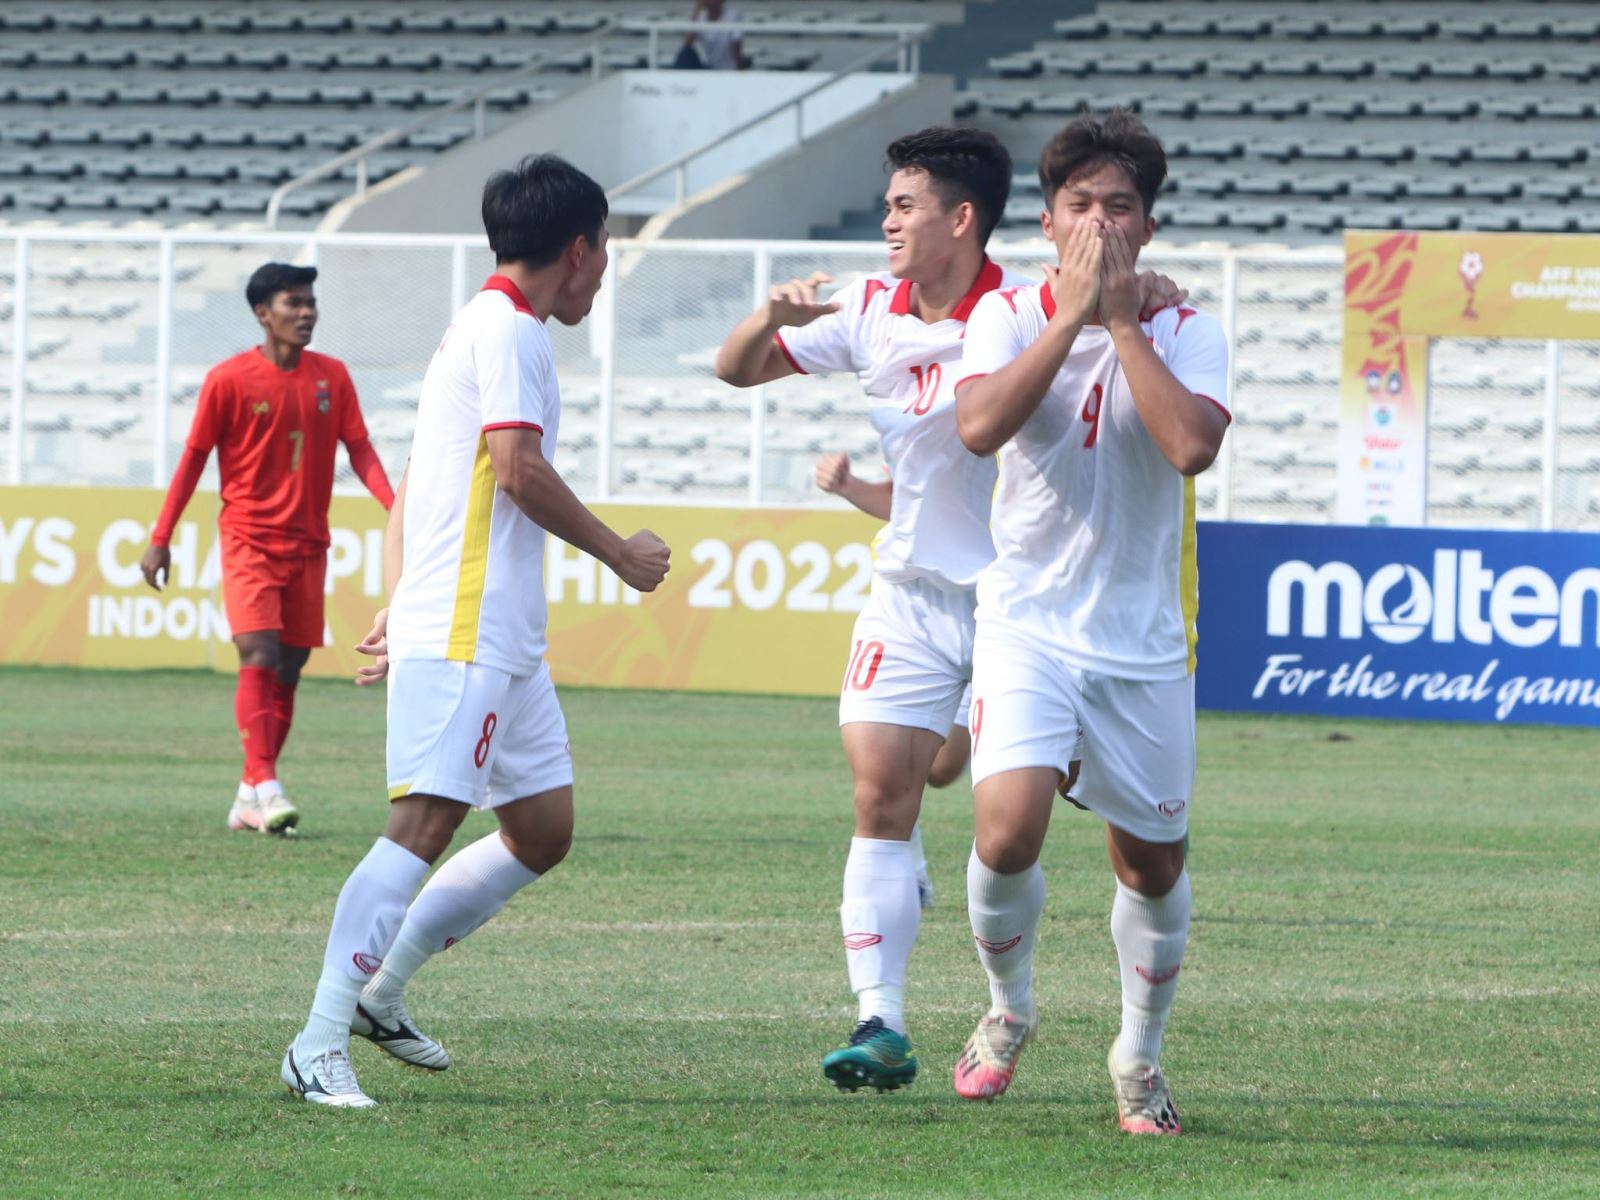 kết quả bóng đá, kết quả bóng đá , ket qua bong da, ket qua bong da hom nay, kết quả bóng đá U19 Đông Nam Á, kết quả U19 Đông Nam Á, U19 Việt Nam vs U19 Myanmar, KQBD U19